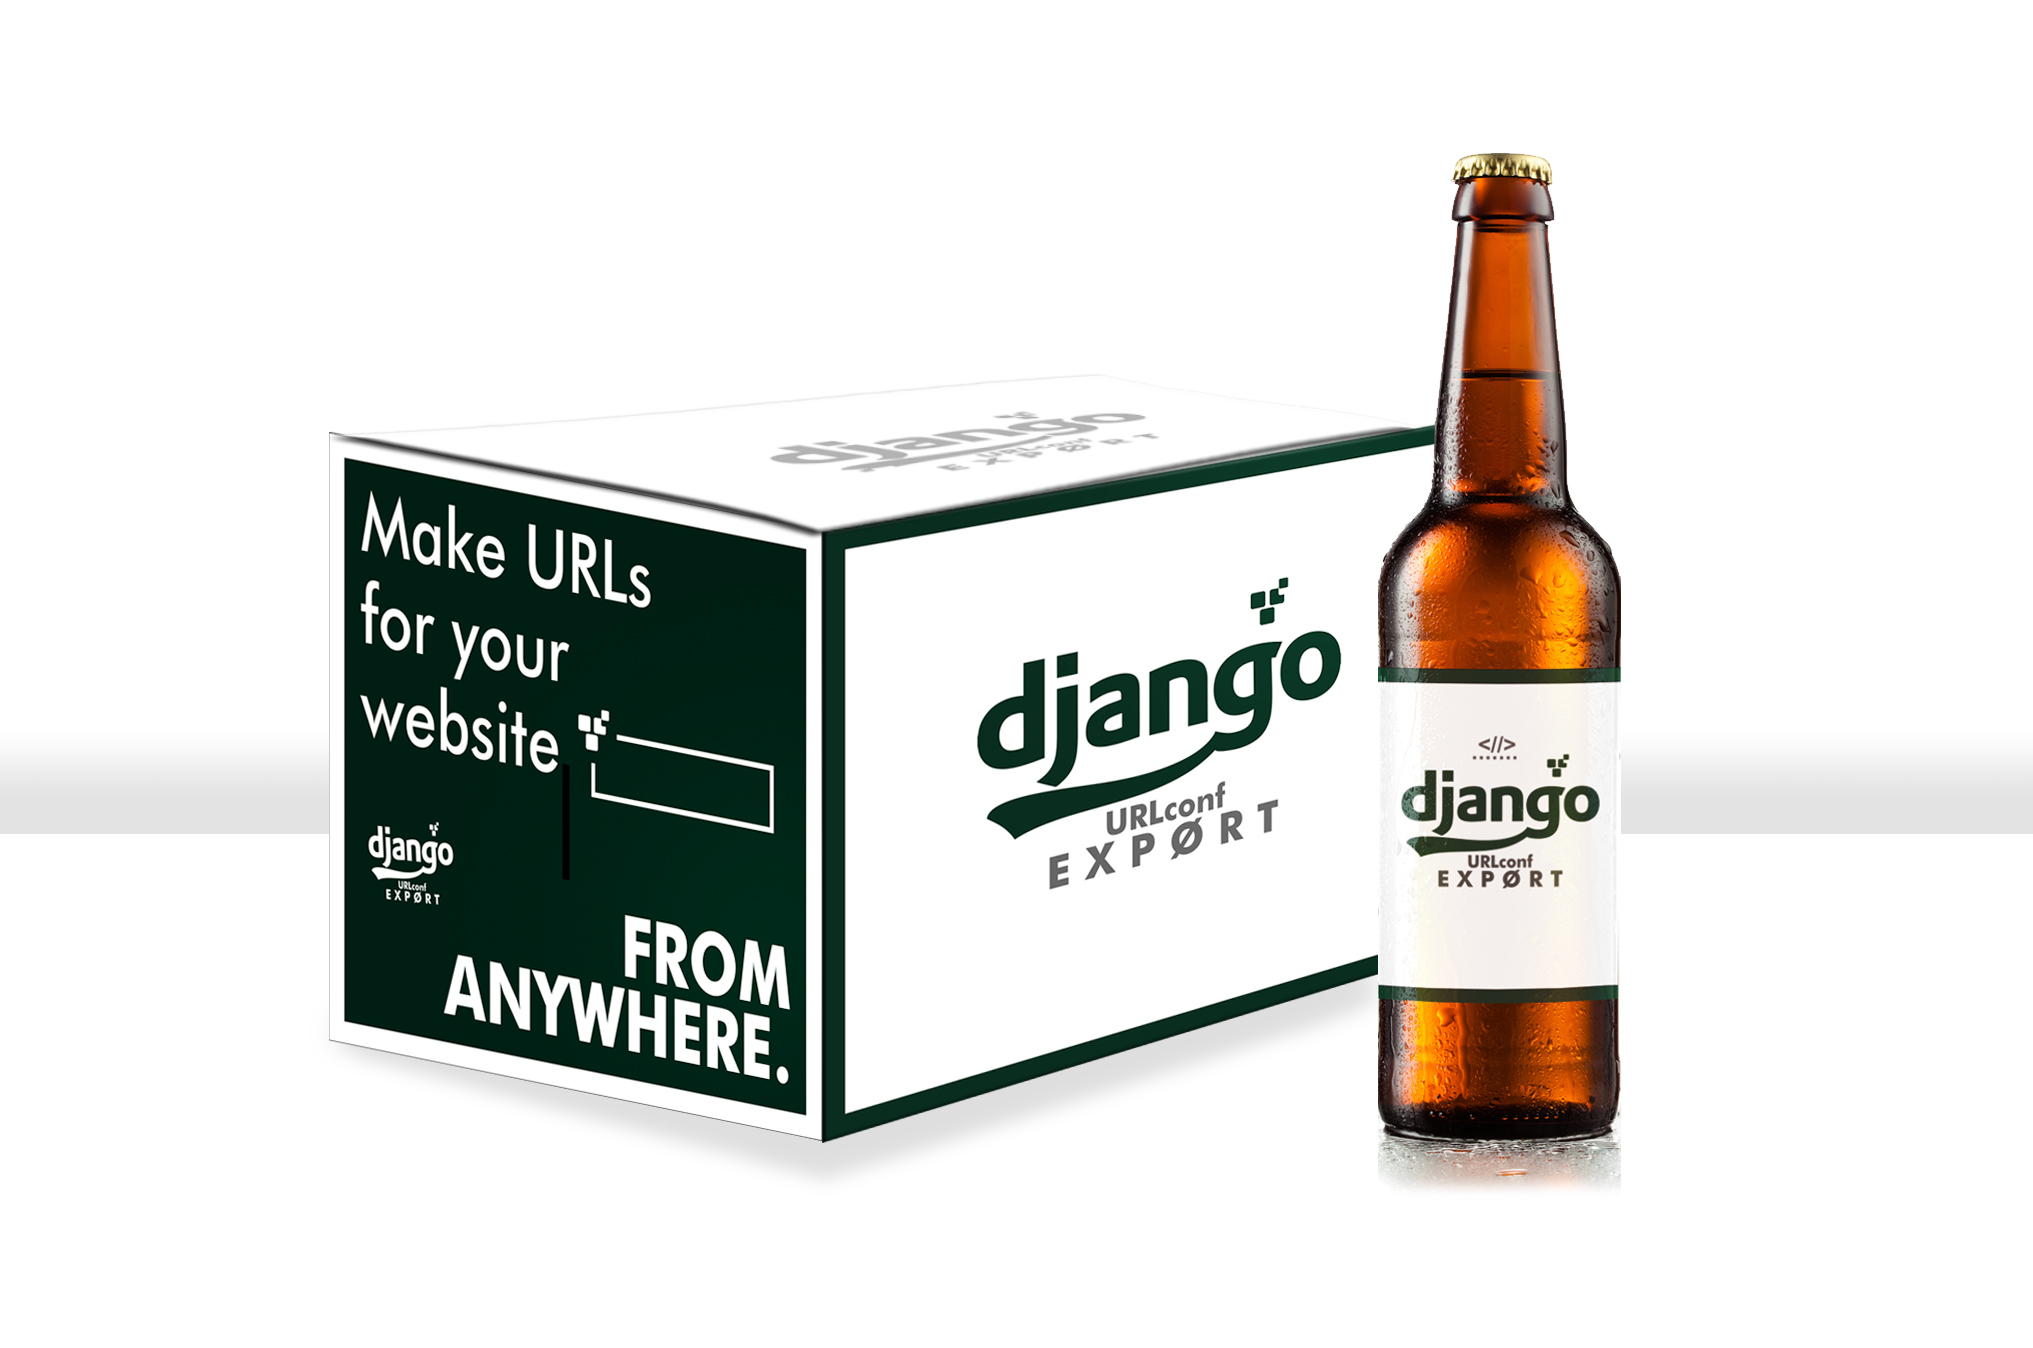 Django URLconf Export logo